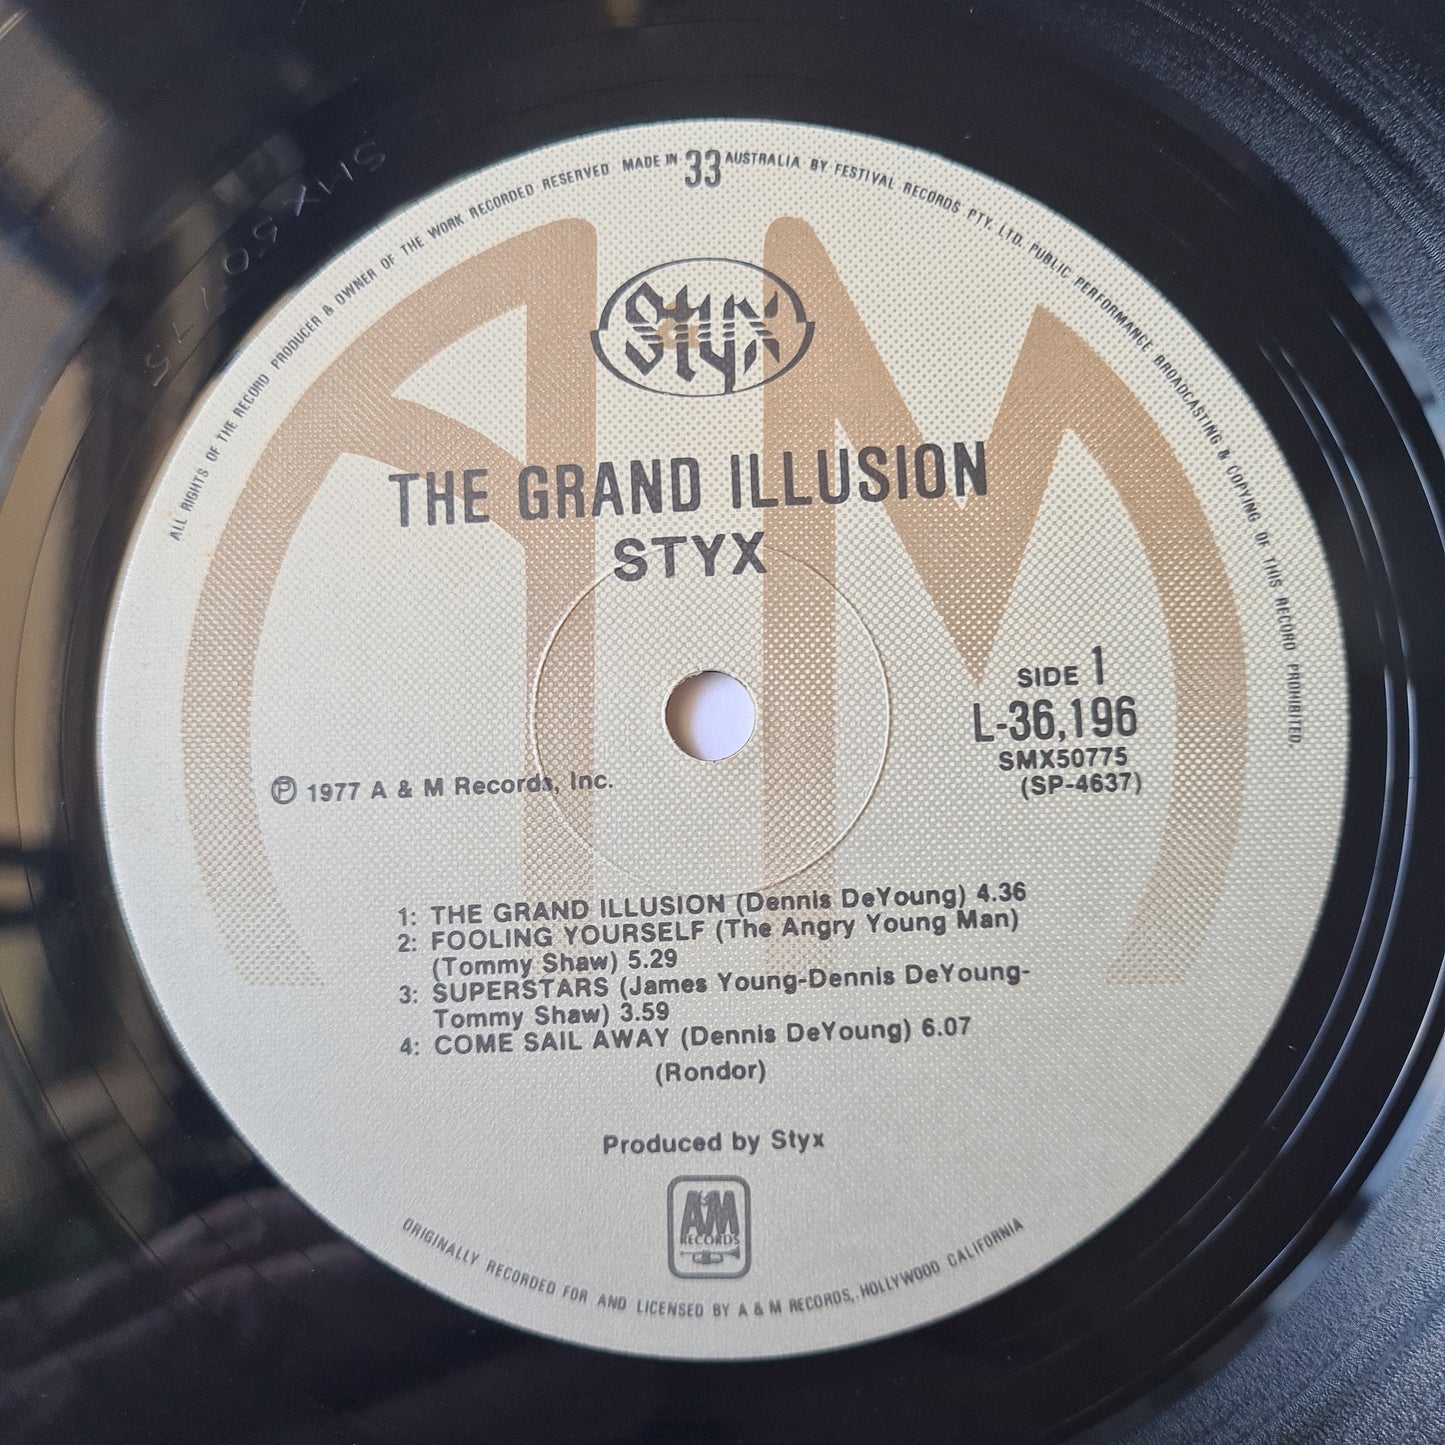 Styx – The Grand Illusion - 1977 - Vinyl Record